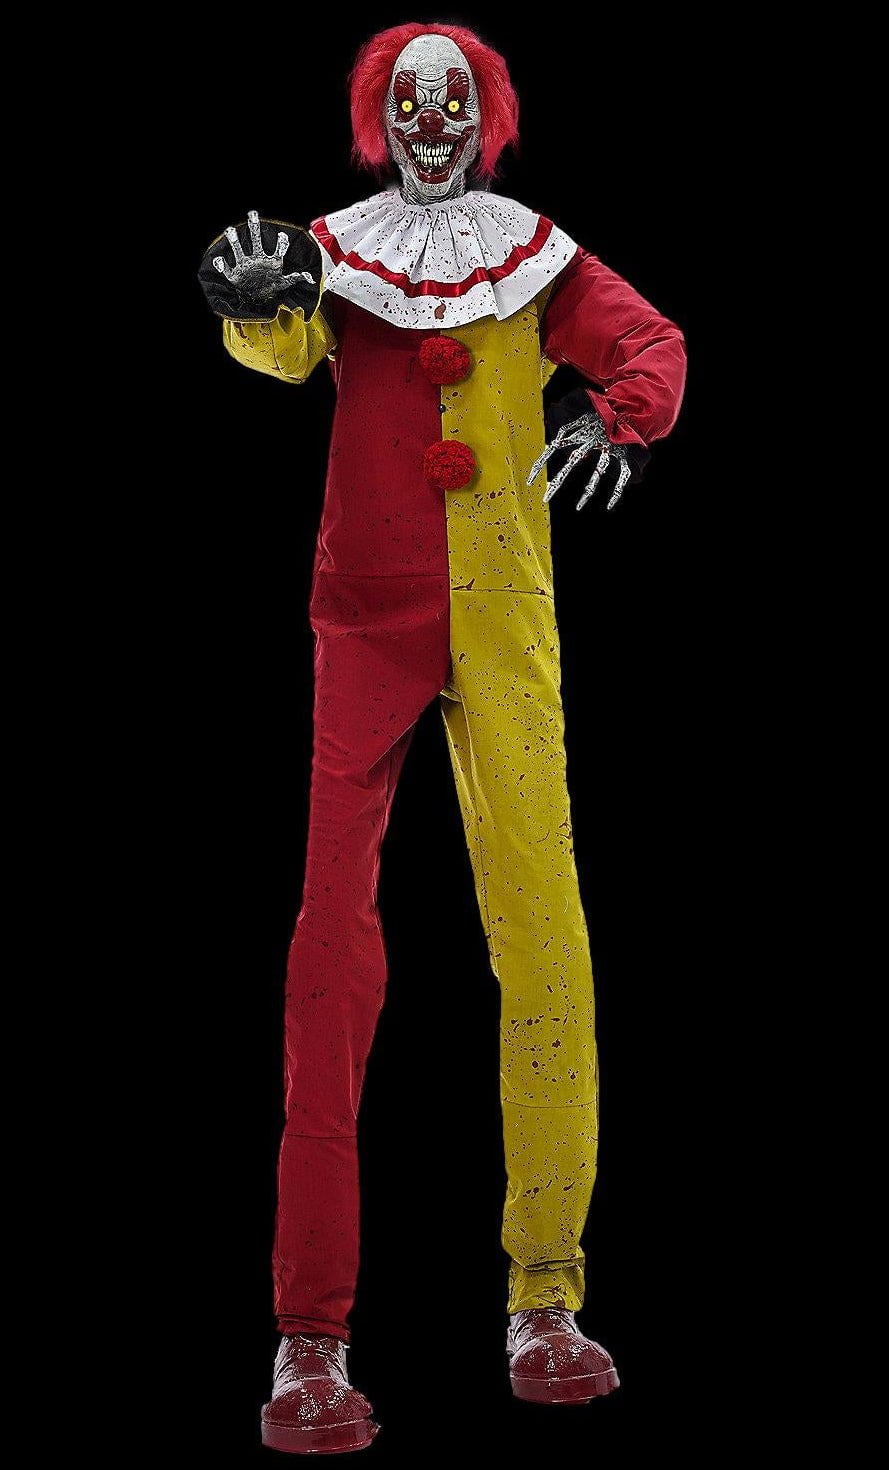 7' "Pesky the Clown" Electric Animated Halloween Prop